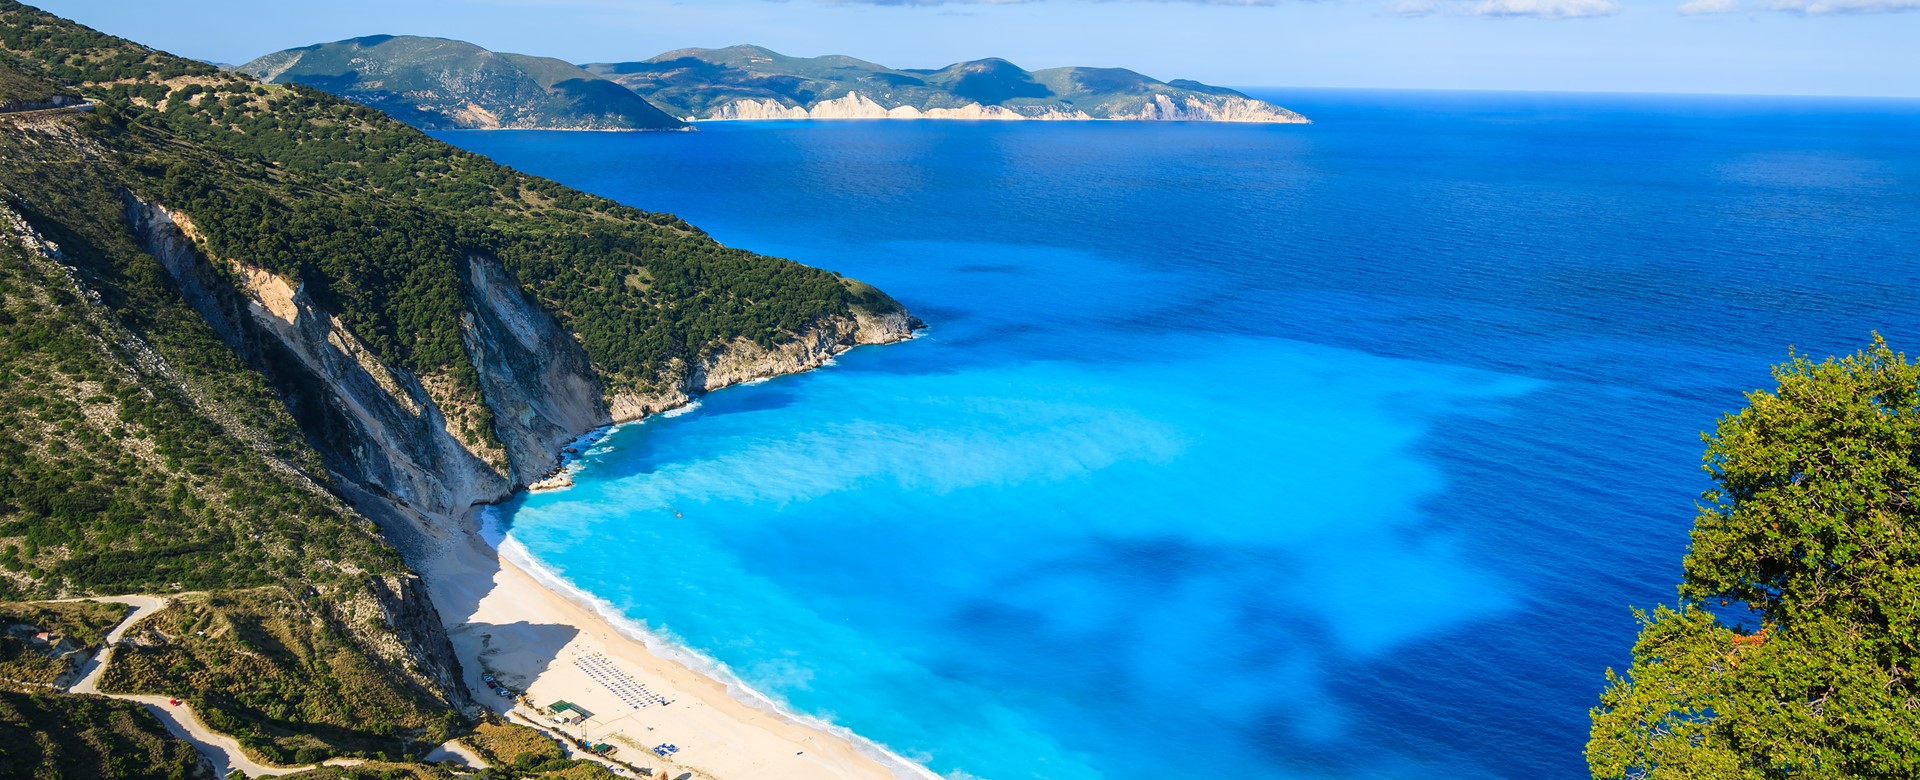 Information about each major destination on Kefalonia | Greek Island ...